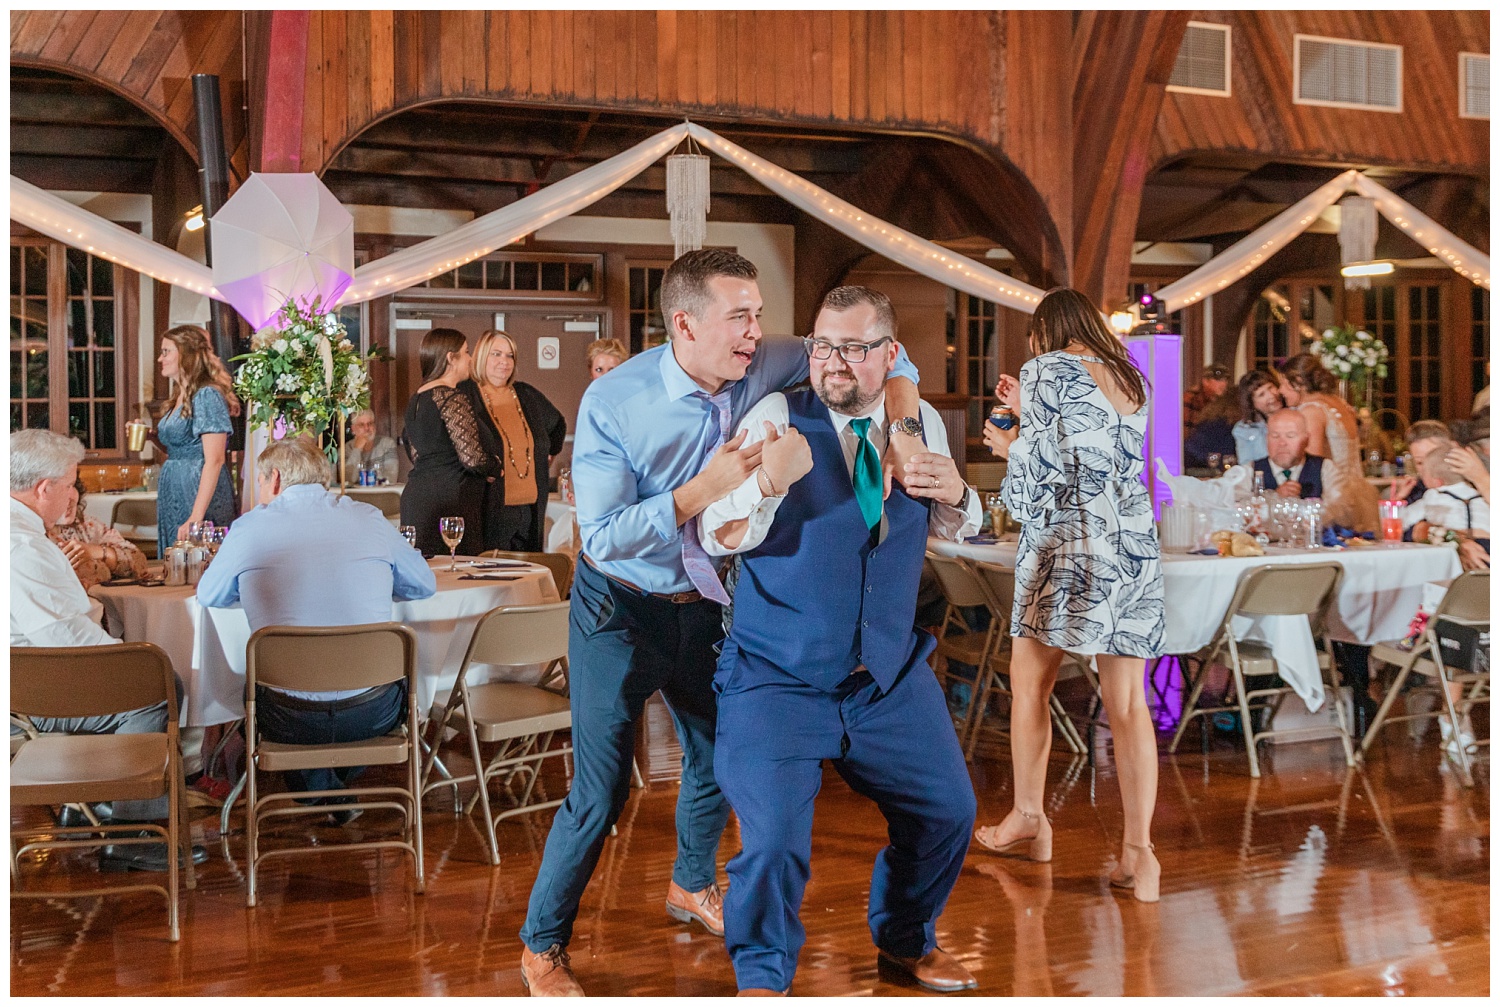 guests dancing at wedding reception in Bascom, Ohio